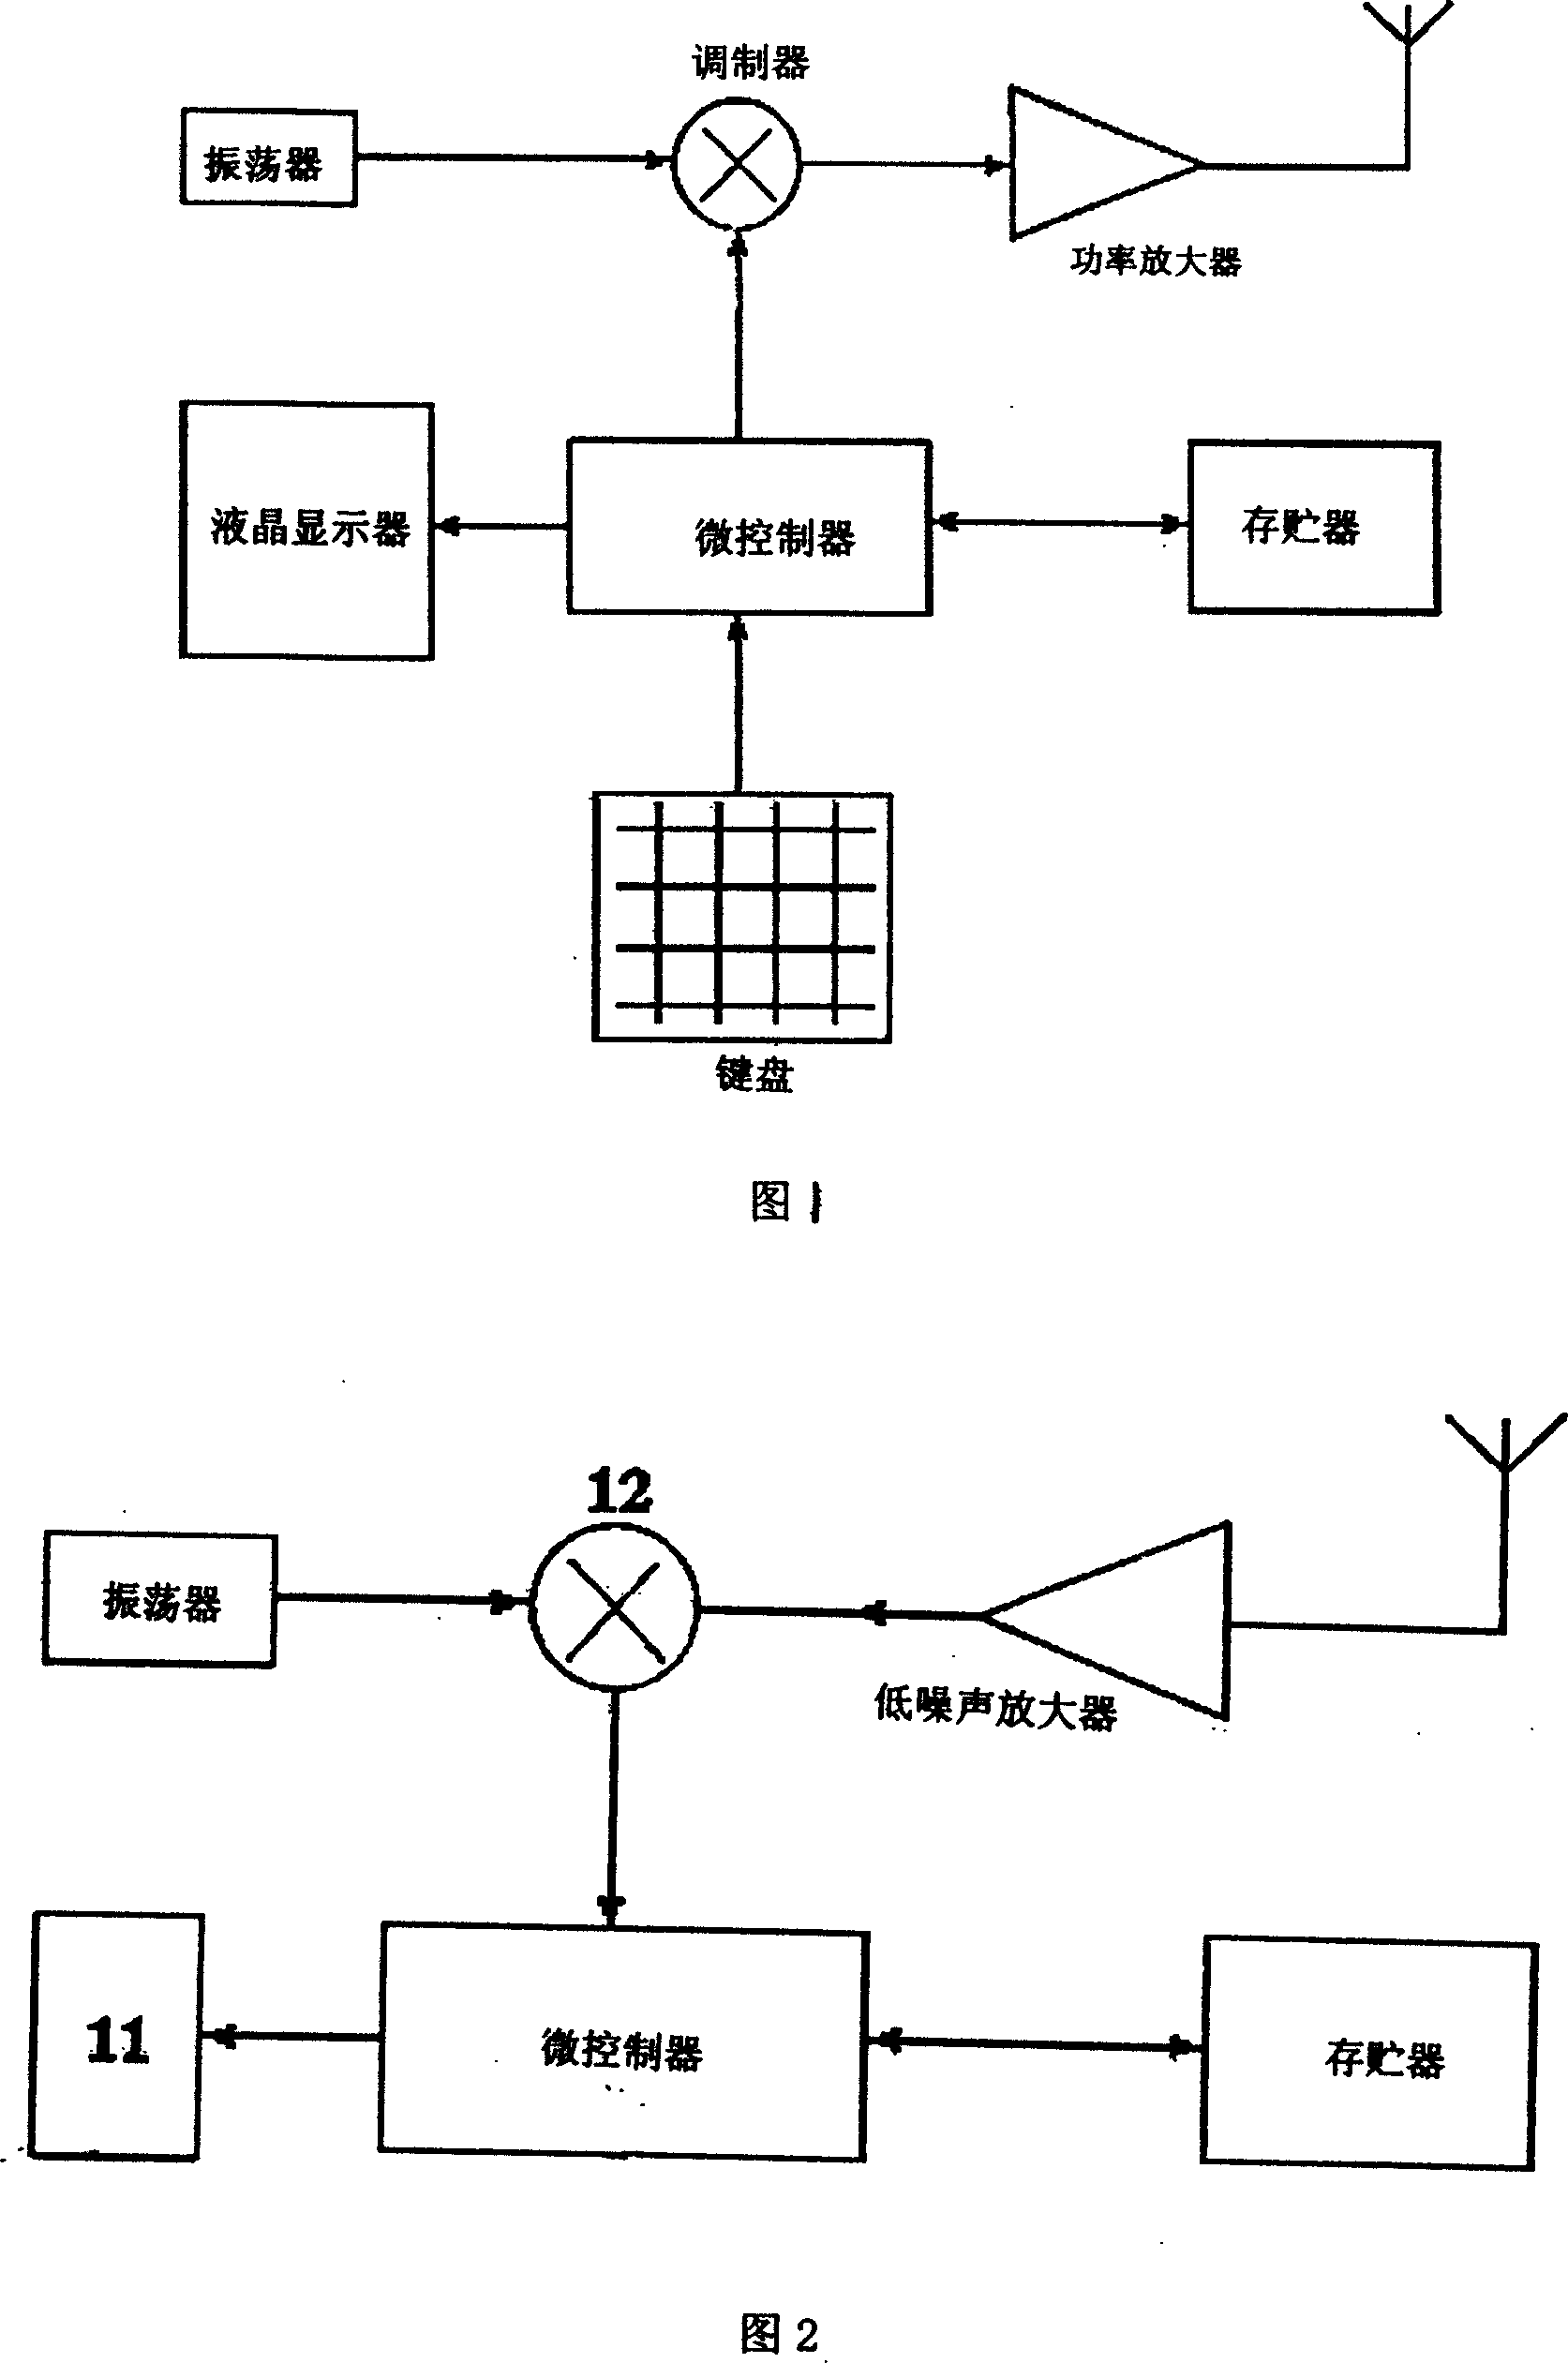 Remote-control detonation control method of industry electric cap